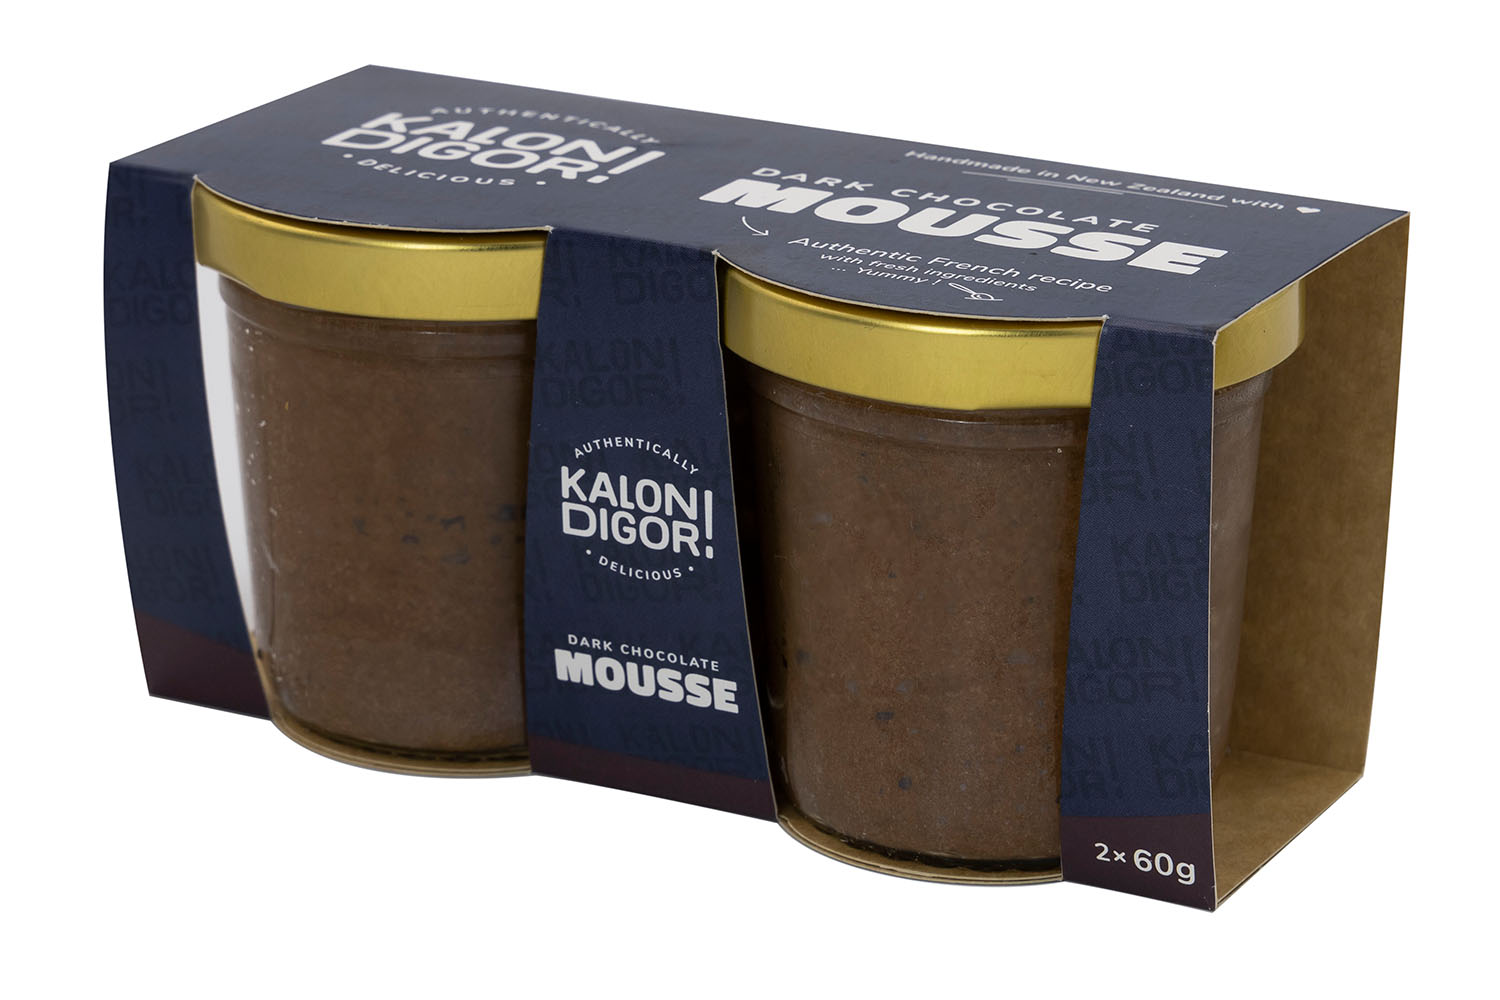 Kalon Digor dark chocolate mousse